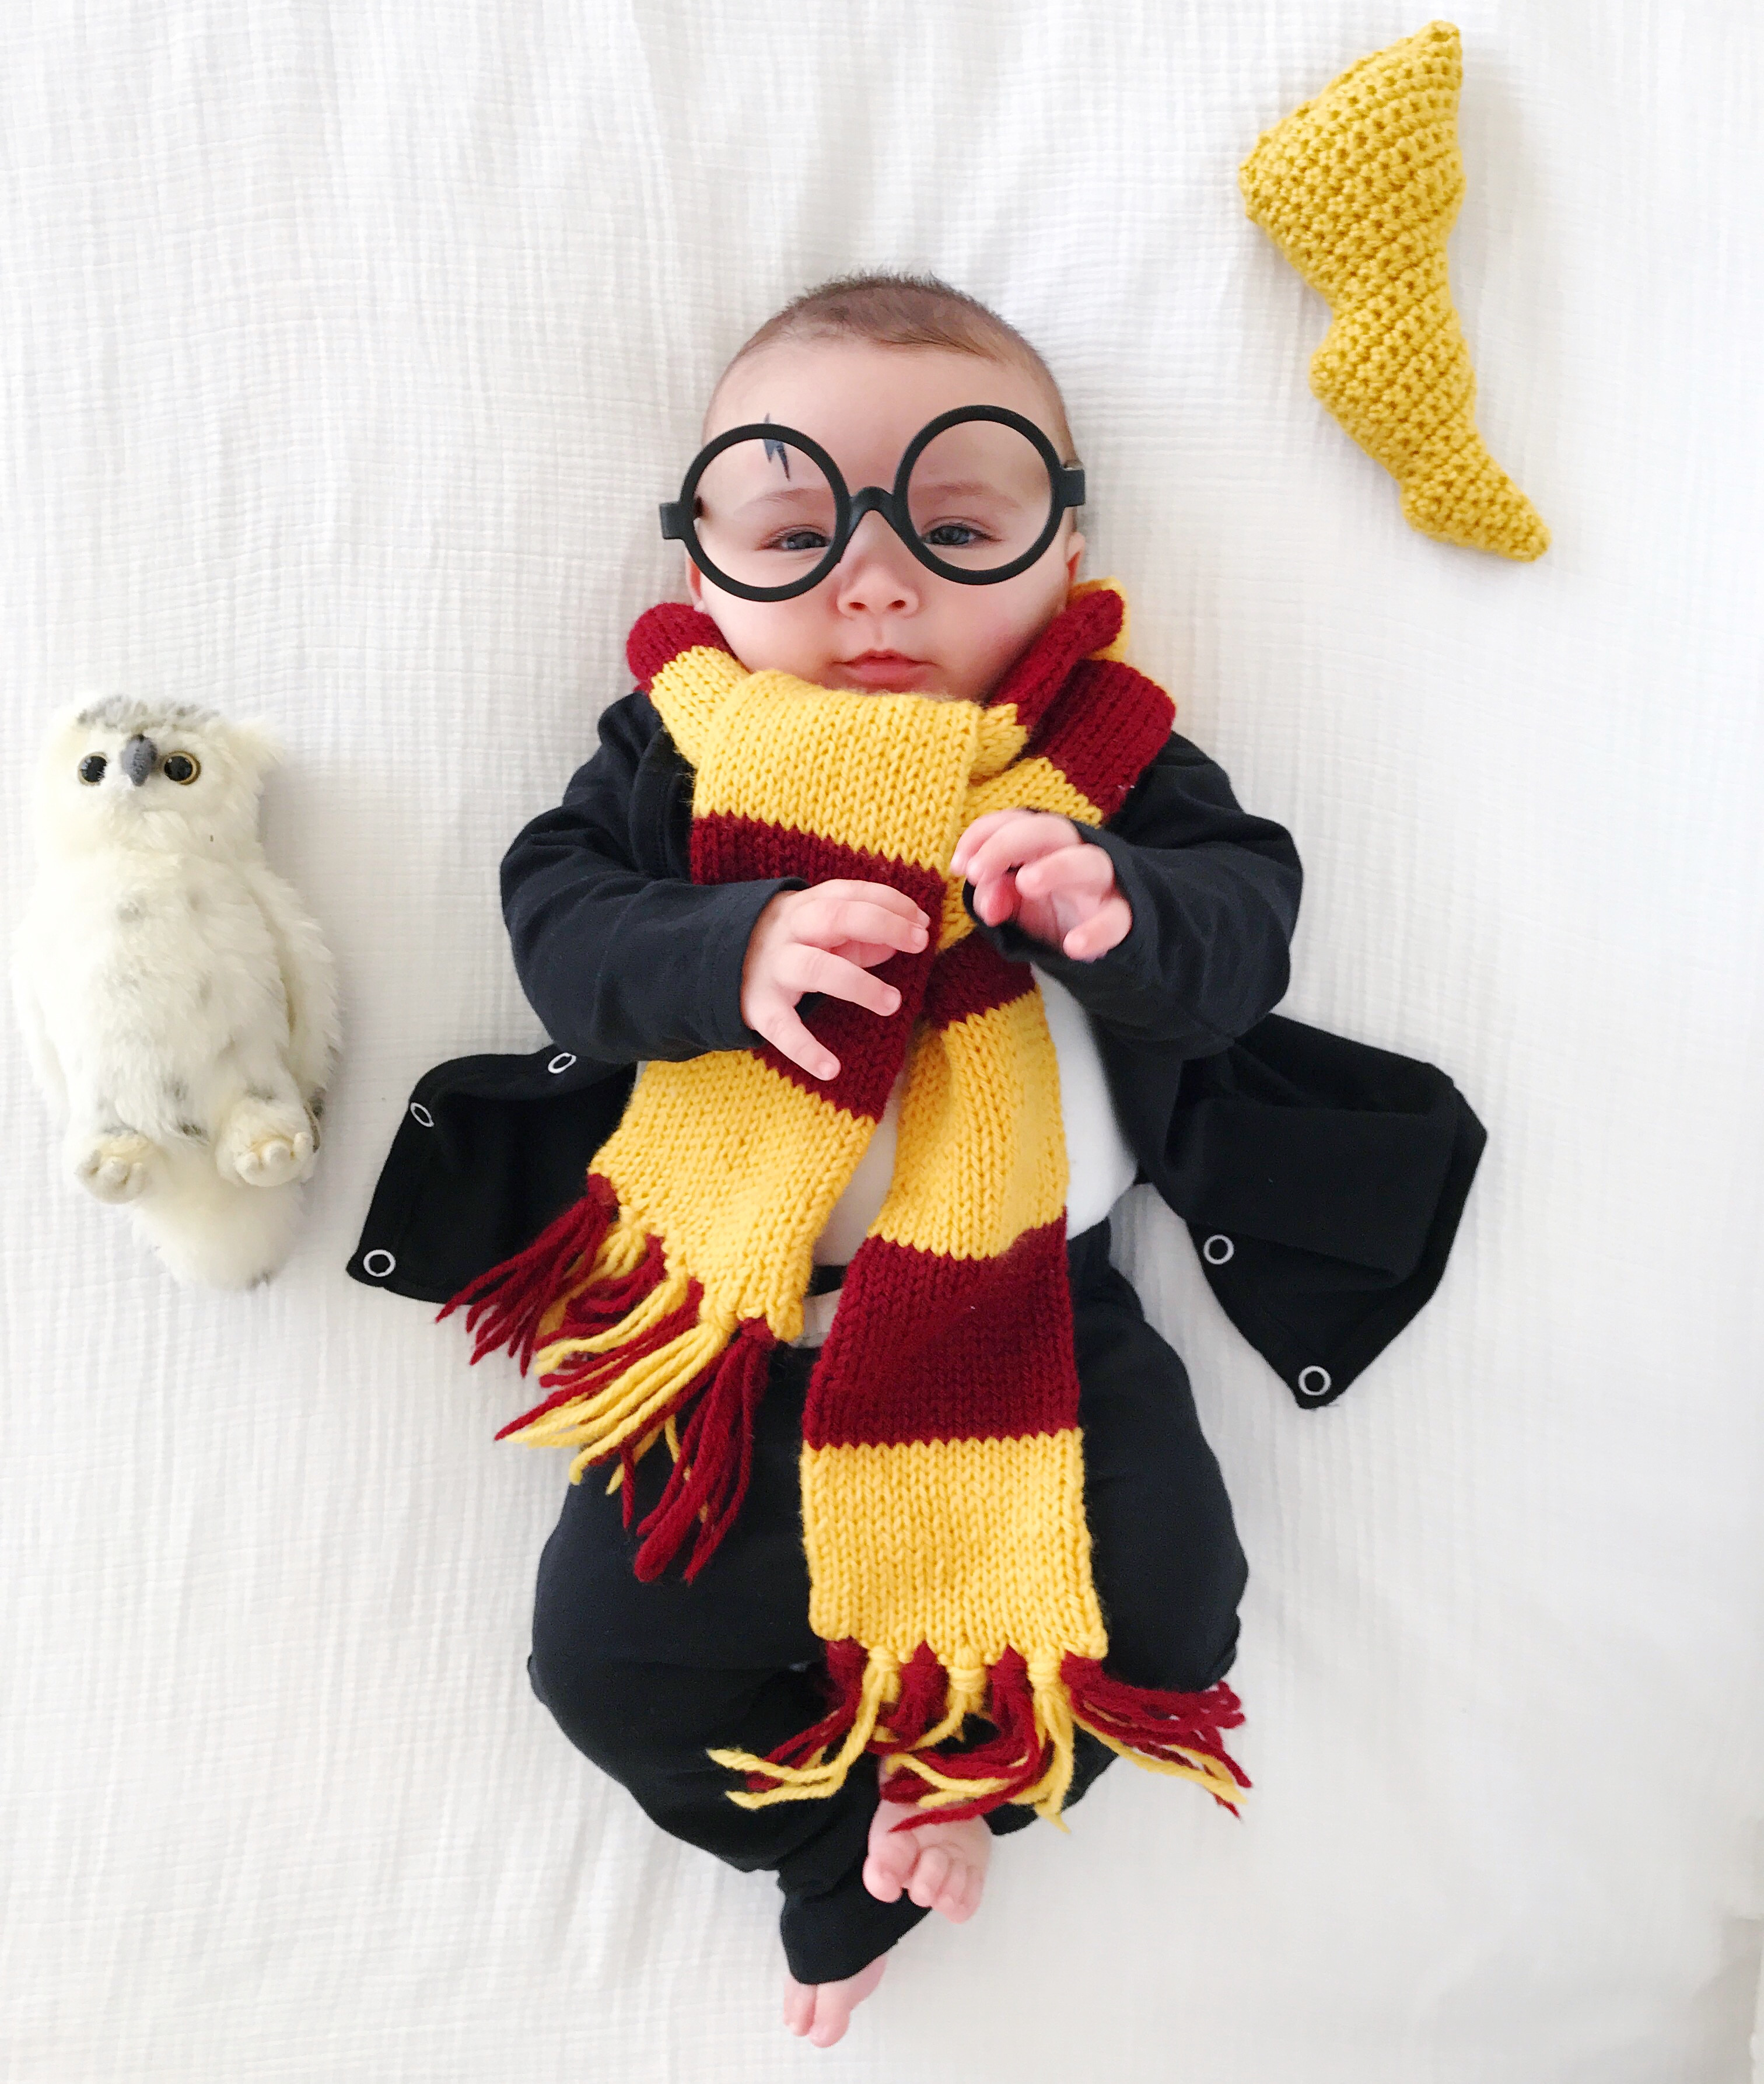 DIY Harry Potter Costumes
 DIY BABY HARRY POTTER COSTUME